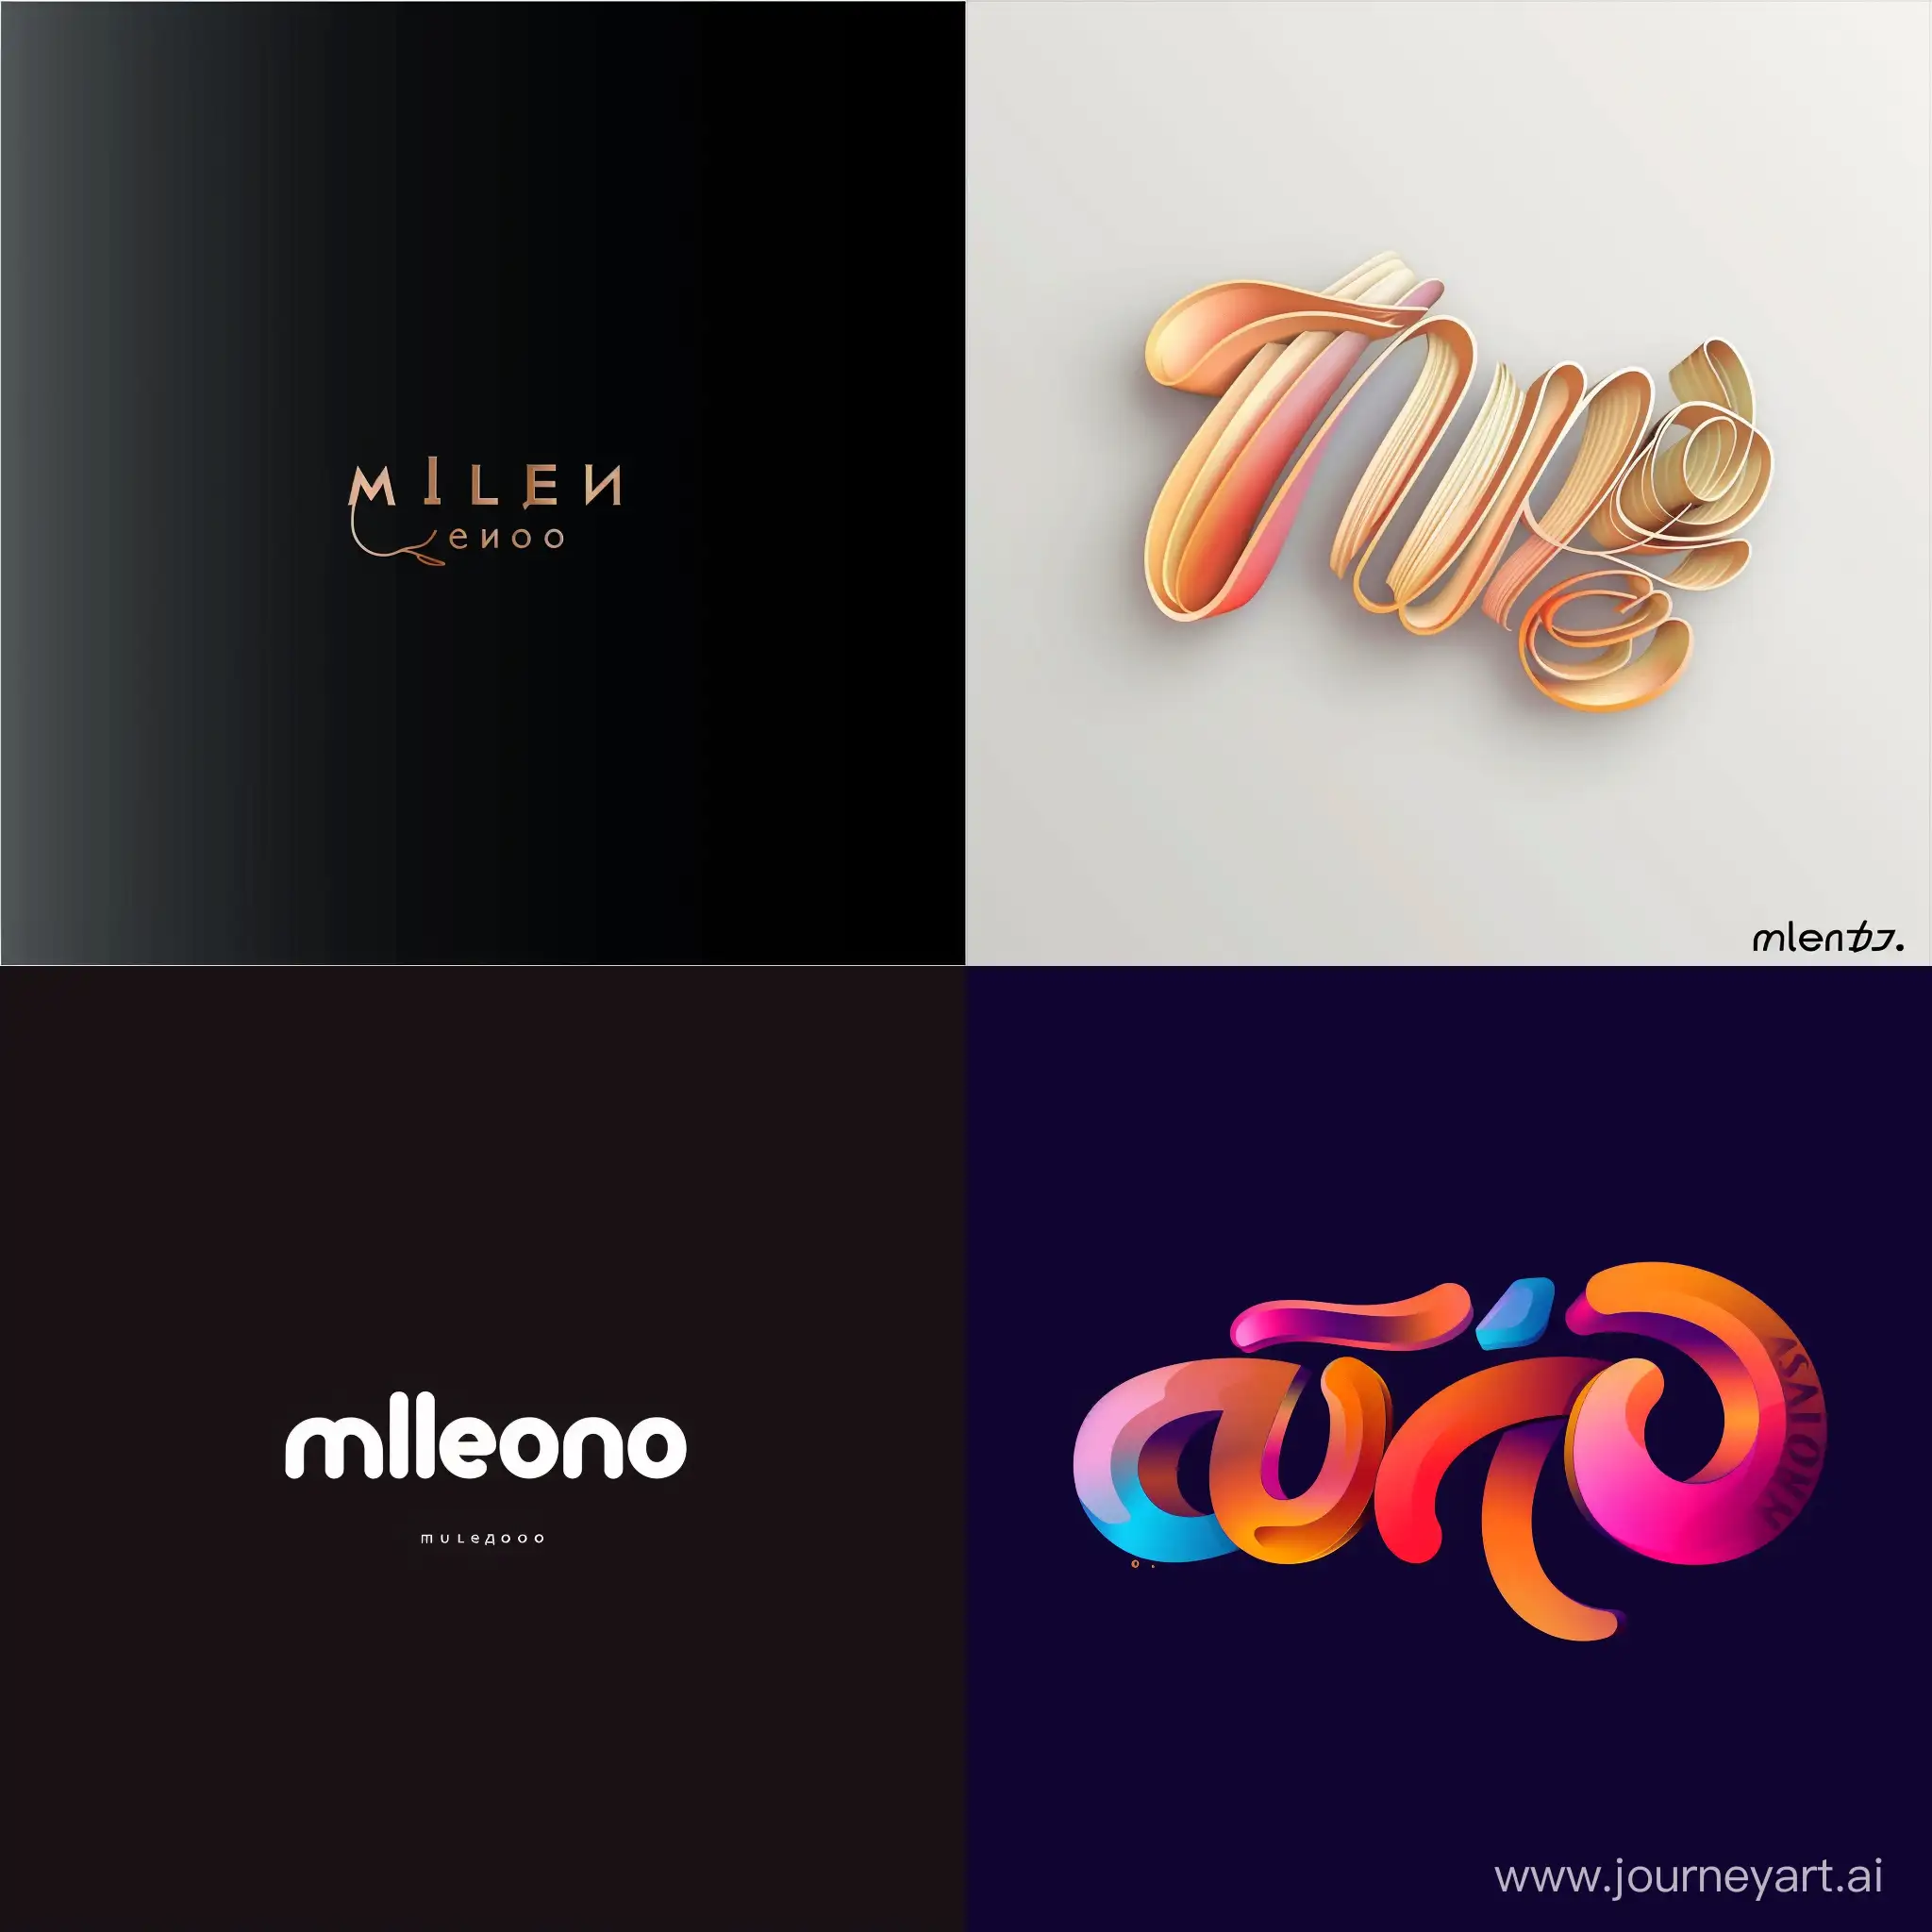  muleno.ru word logo, minimalism, style, taste, modernity, effects on letters